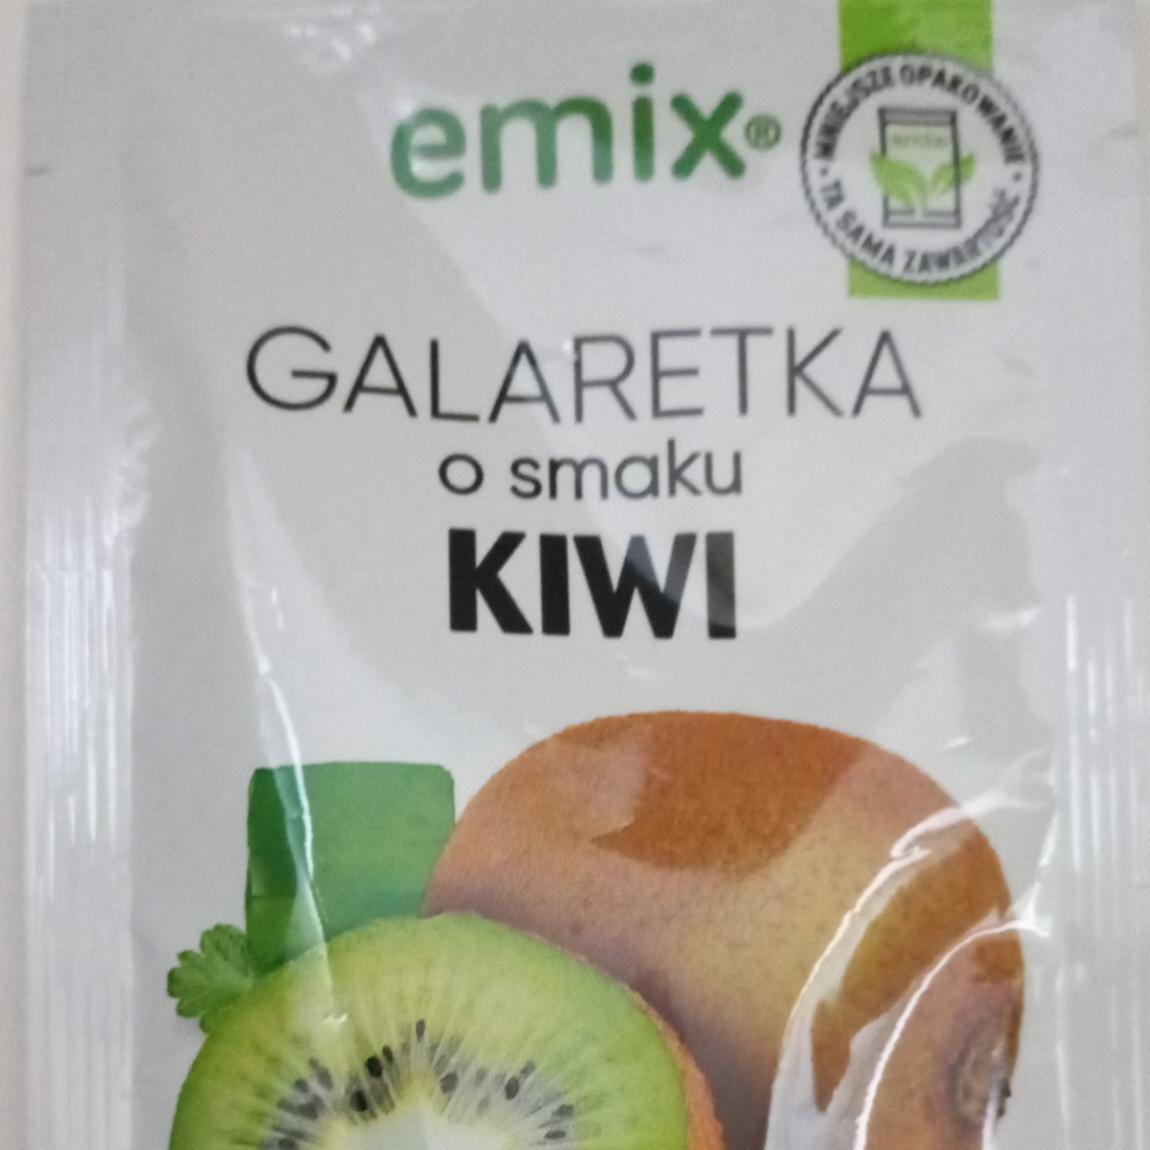 Фото - Желе со вкусом киви Galaretka Kiwi Emix